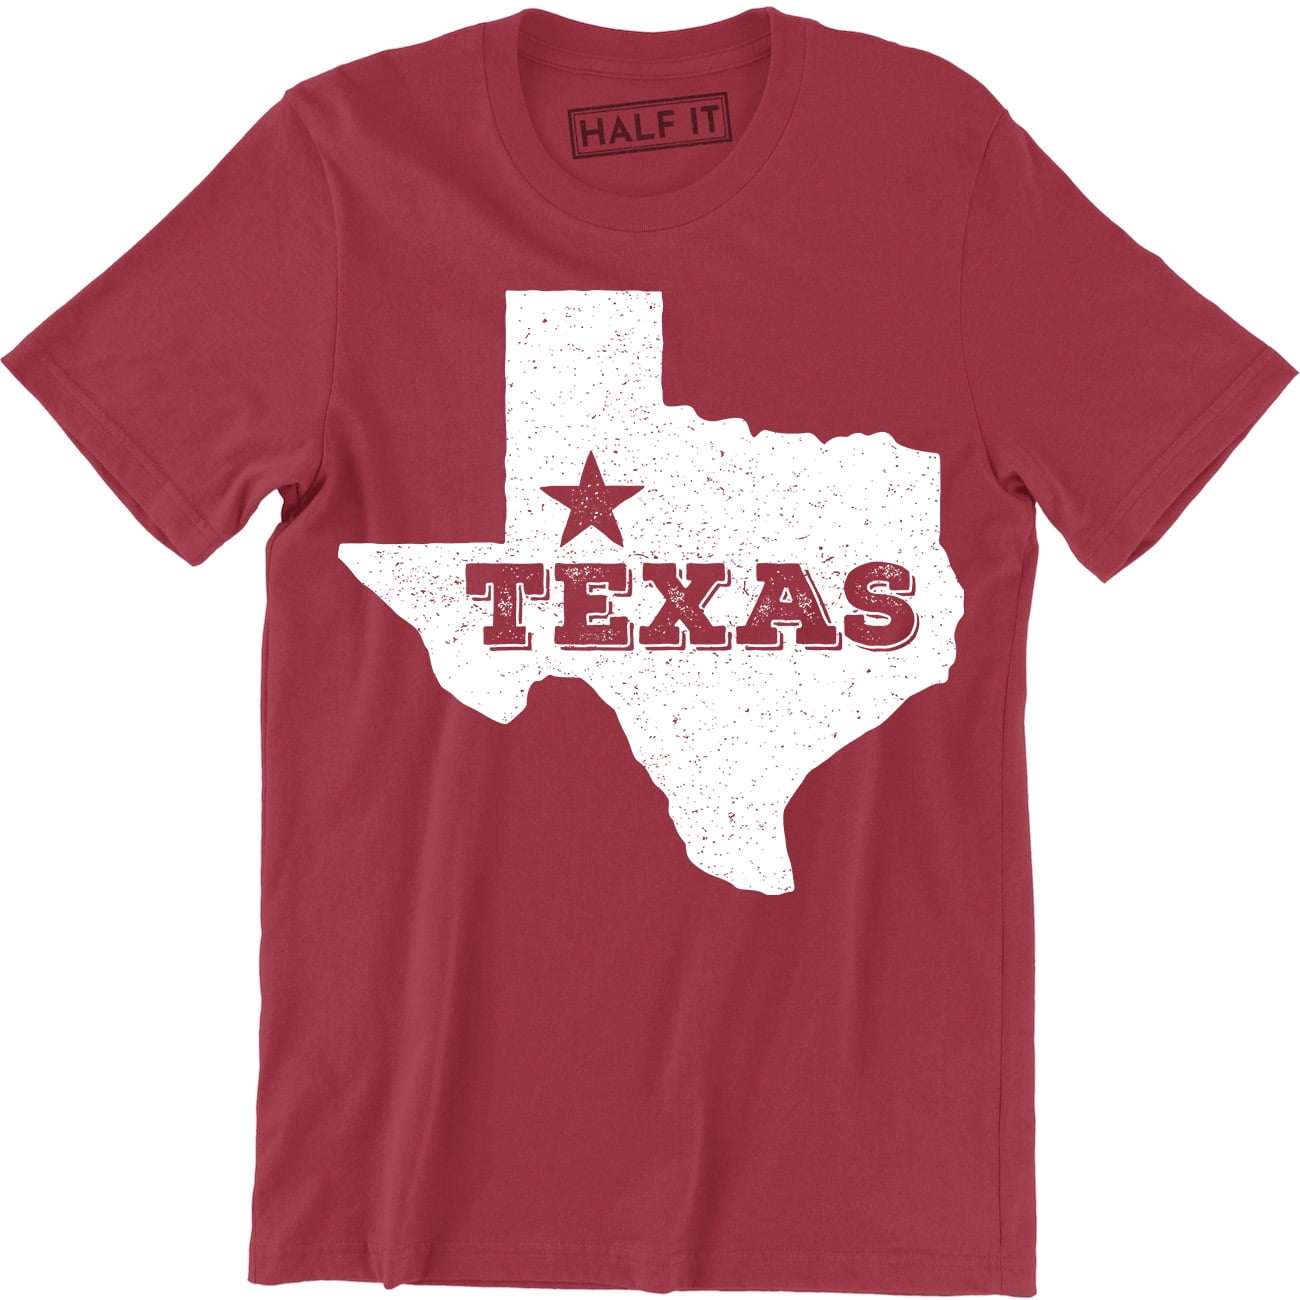 Texas Pride Texas Shirt Gift for Texan Cowboy Land Clothing Texas Austin Outfit Home State Apparel Peace Love Texas T-Shirt